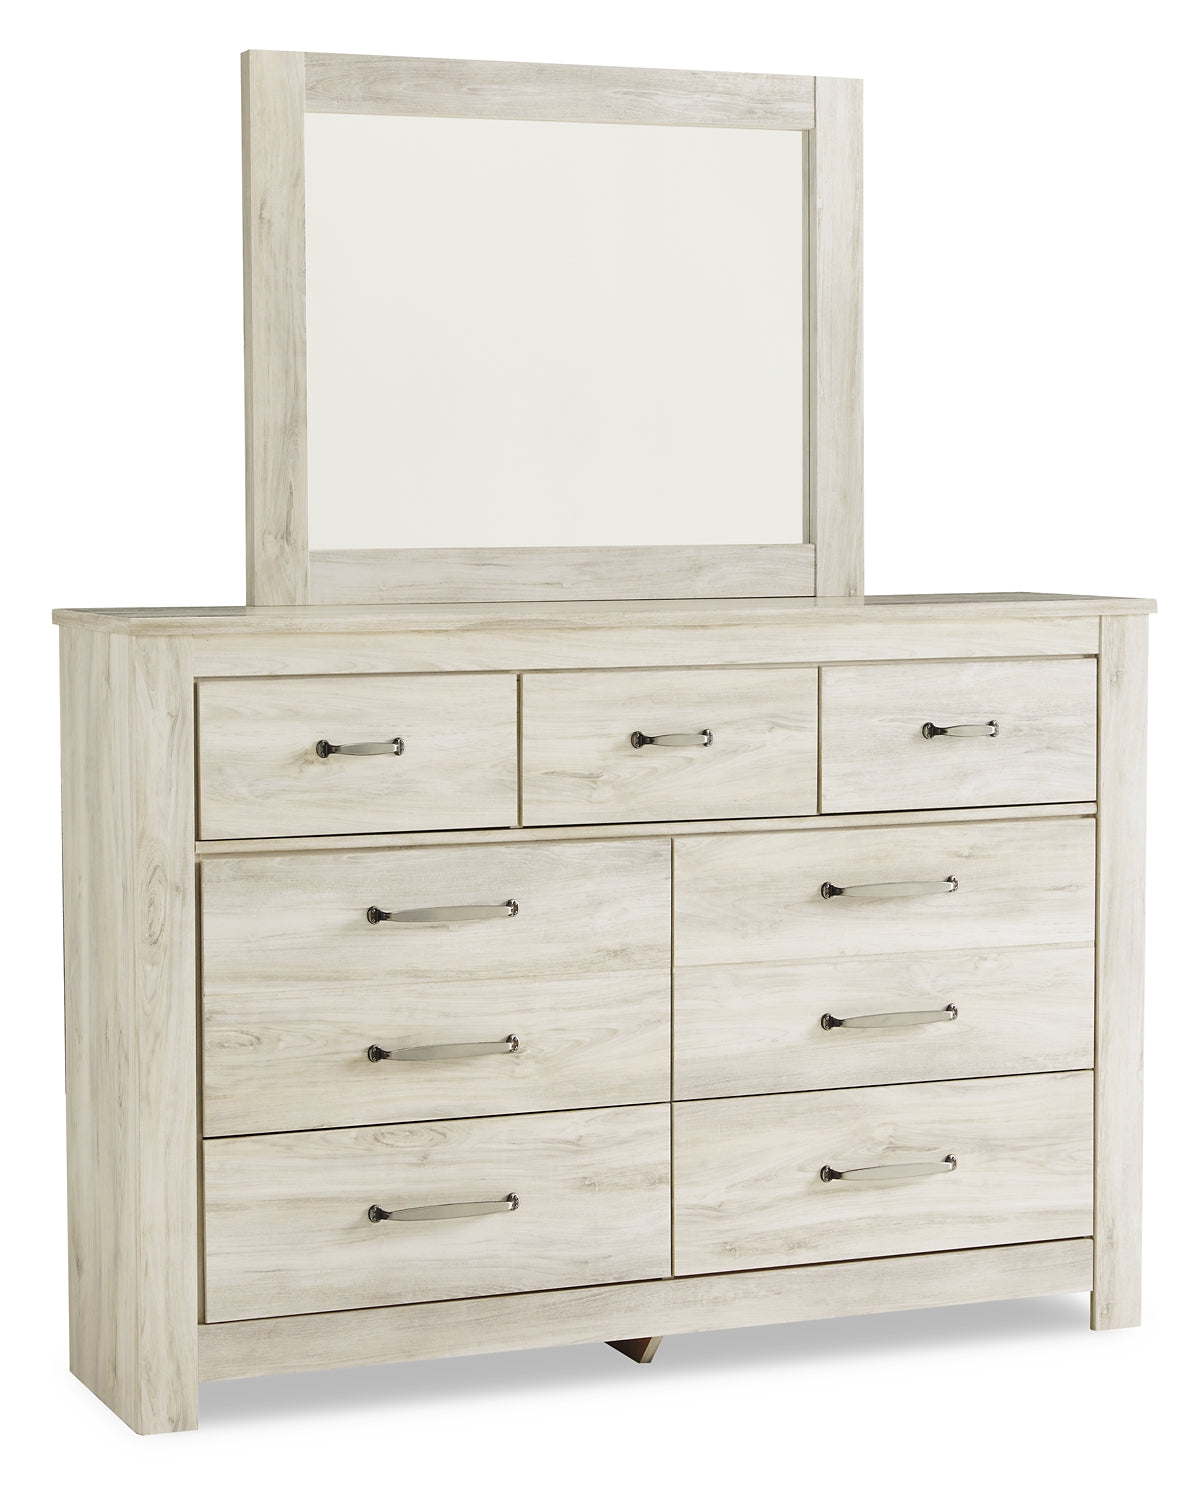 Bellaby Queen Panel Headboard with Mirrored Dresser and 2 Nightstands Cloud 9 Mattress & Furniture